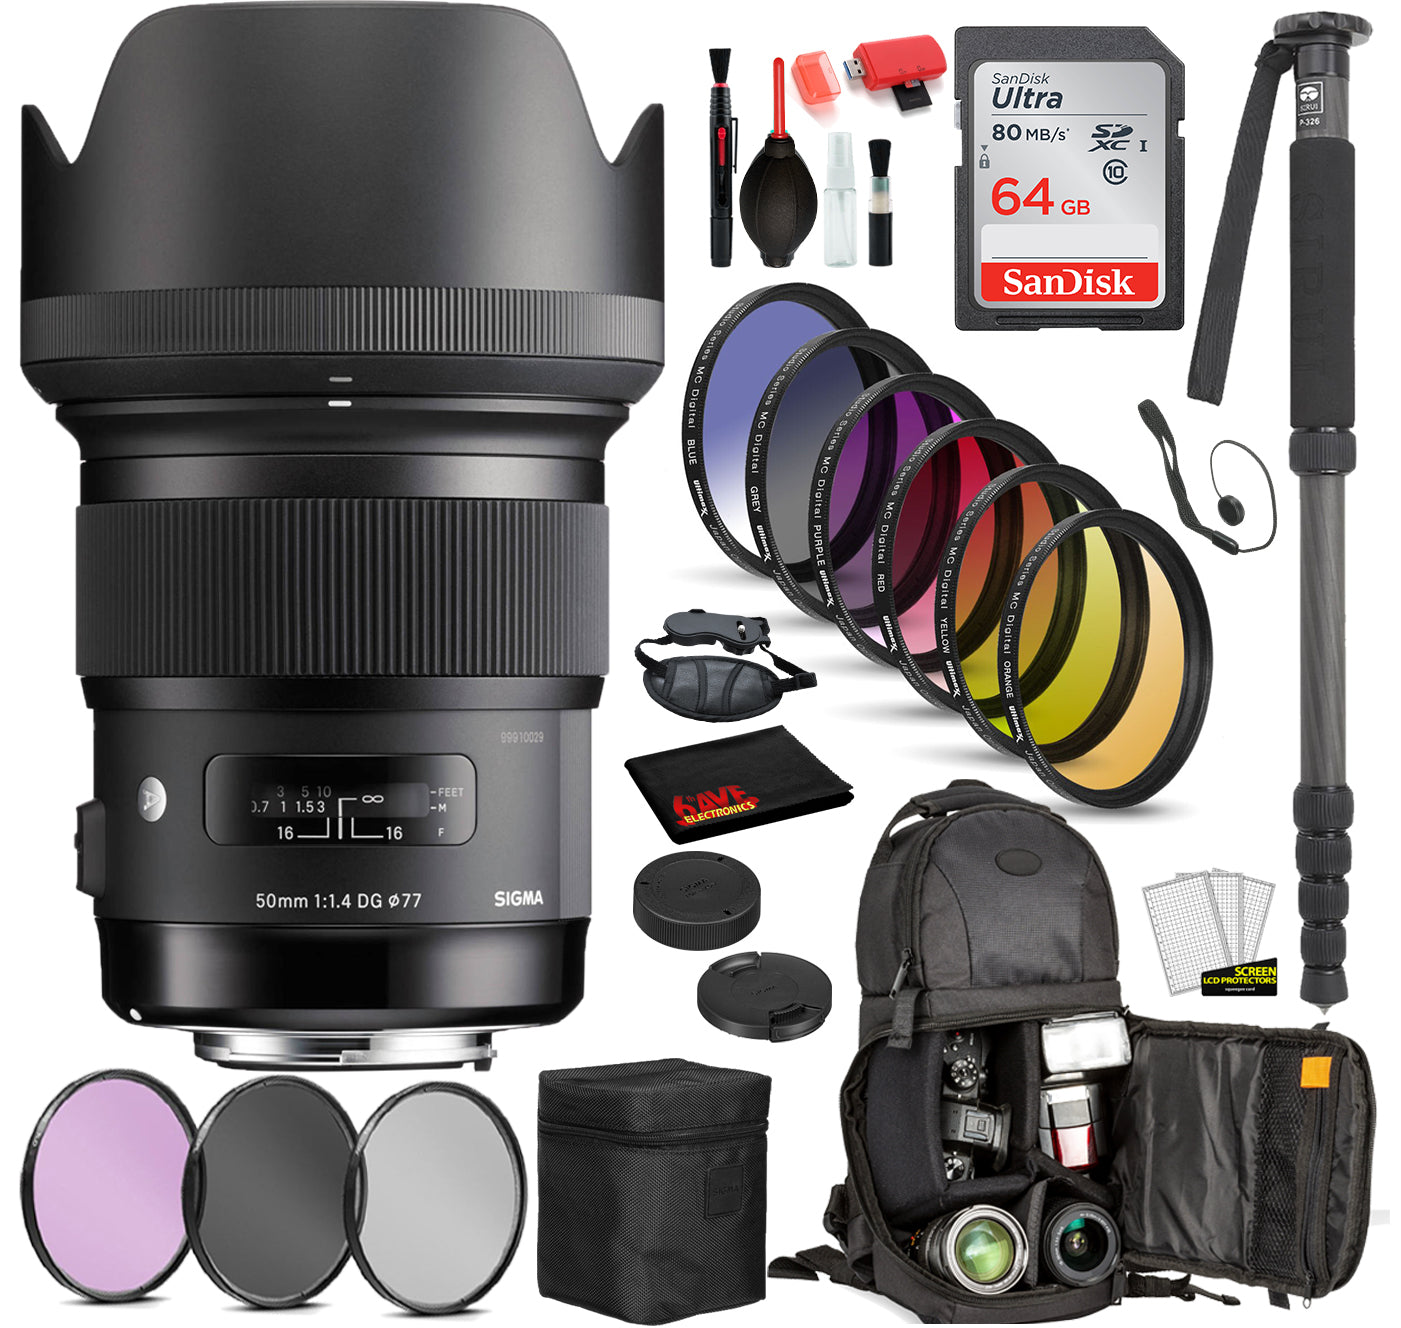 Sigma 50mm f/1.4 DG HSM Art Lens for Nikon F with Bundle: Sandisk 64gb SD Card, 9PC Filter Kit + More